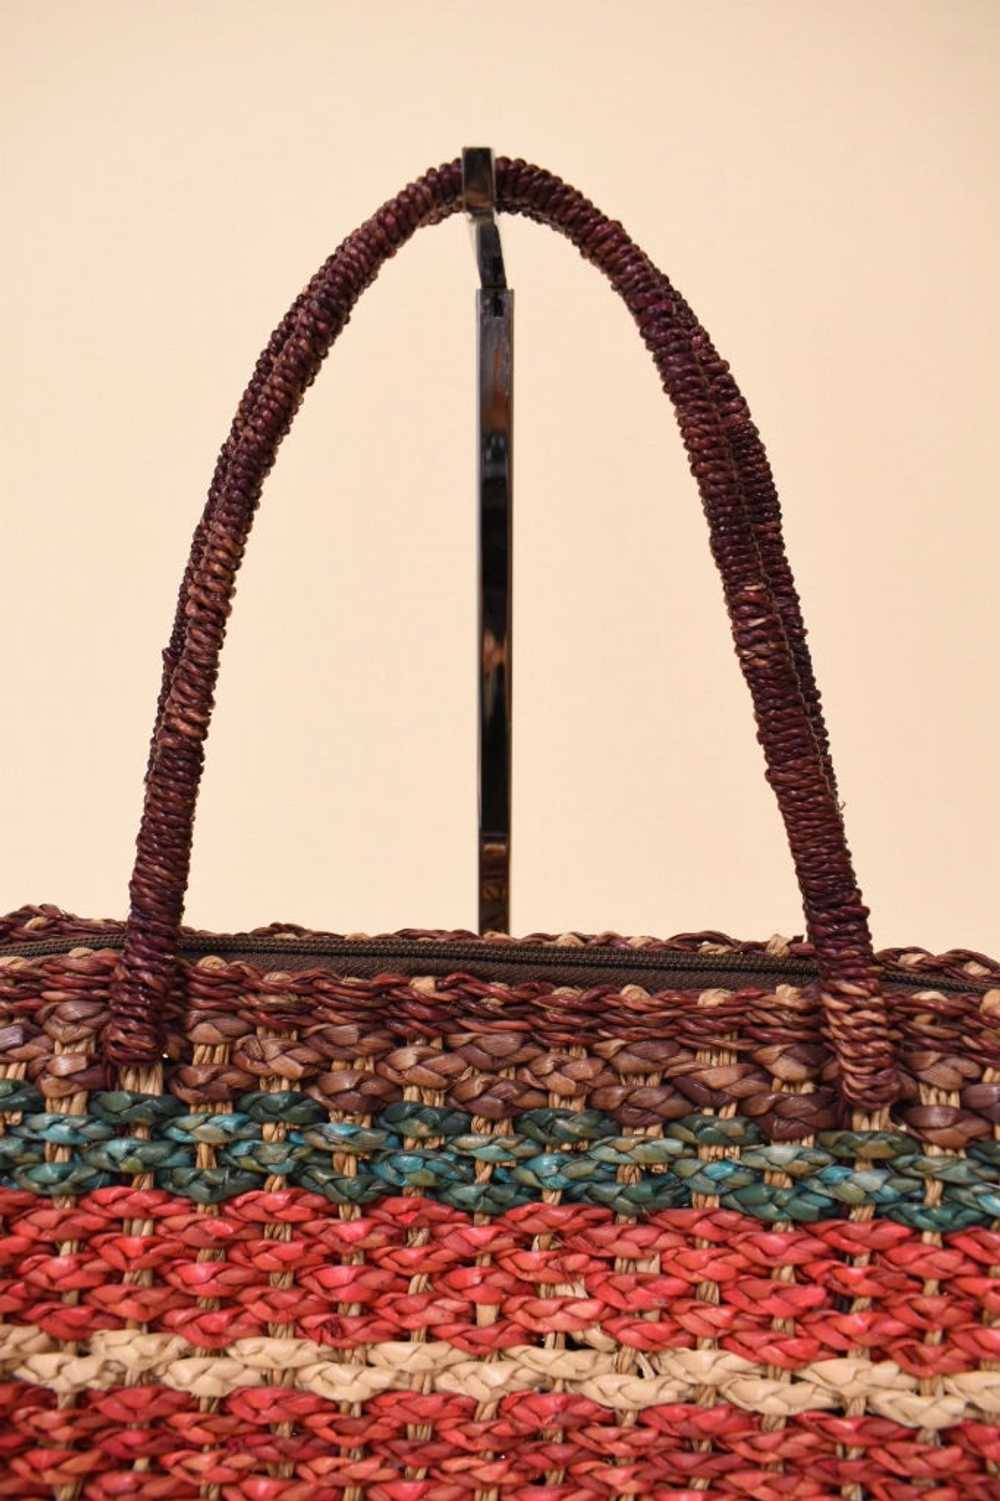 Colorfully Striped Woven Seagrass Handbag - image 4